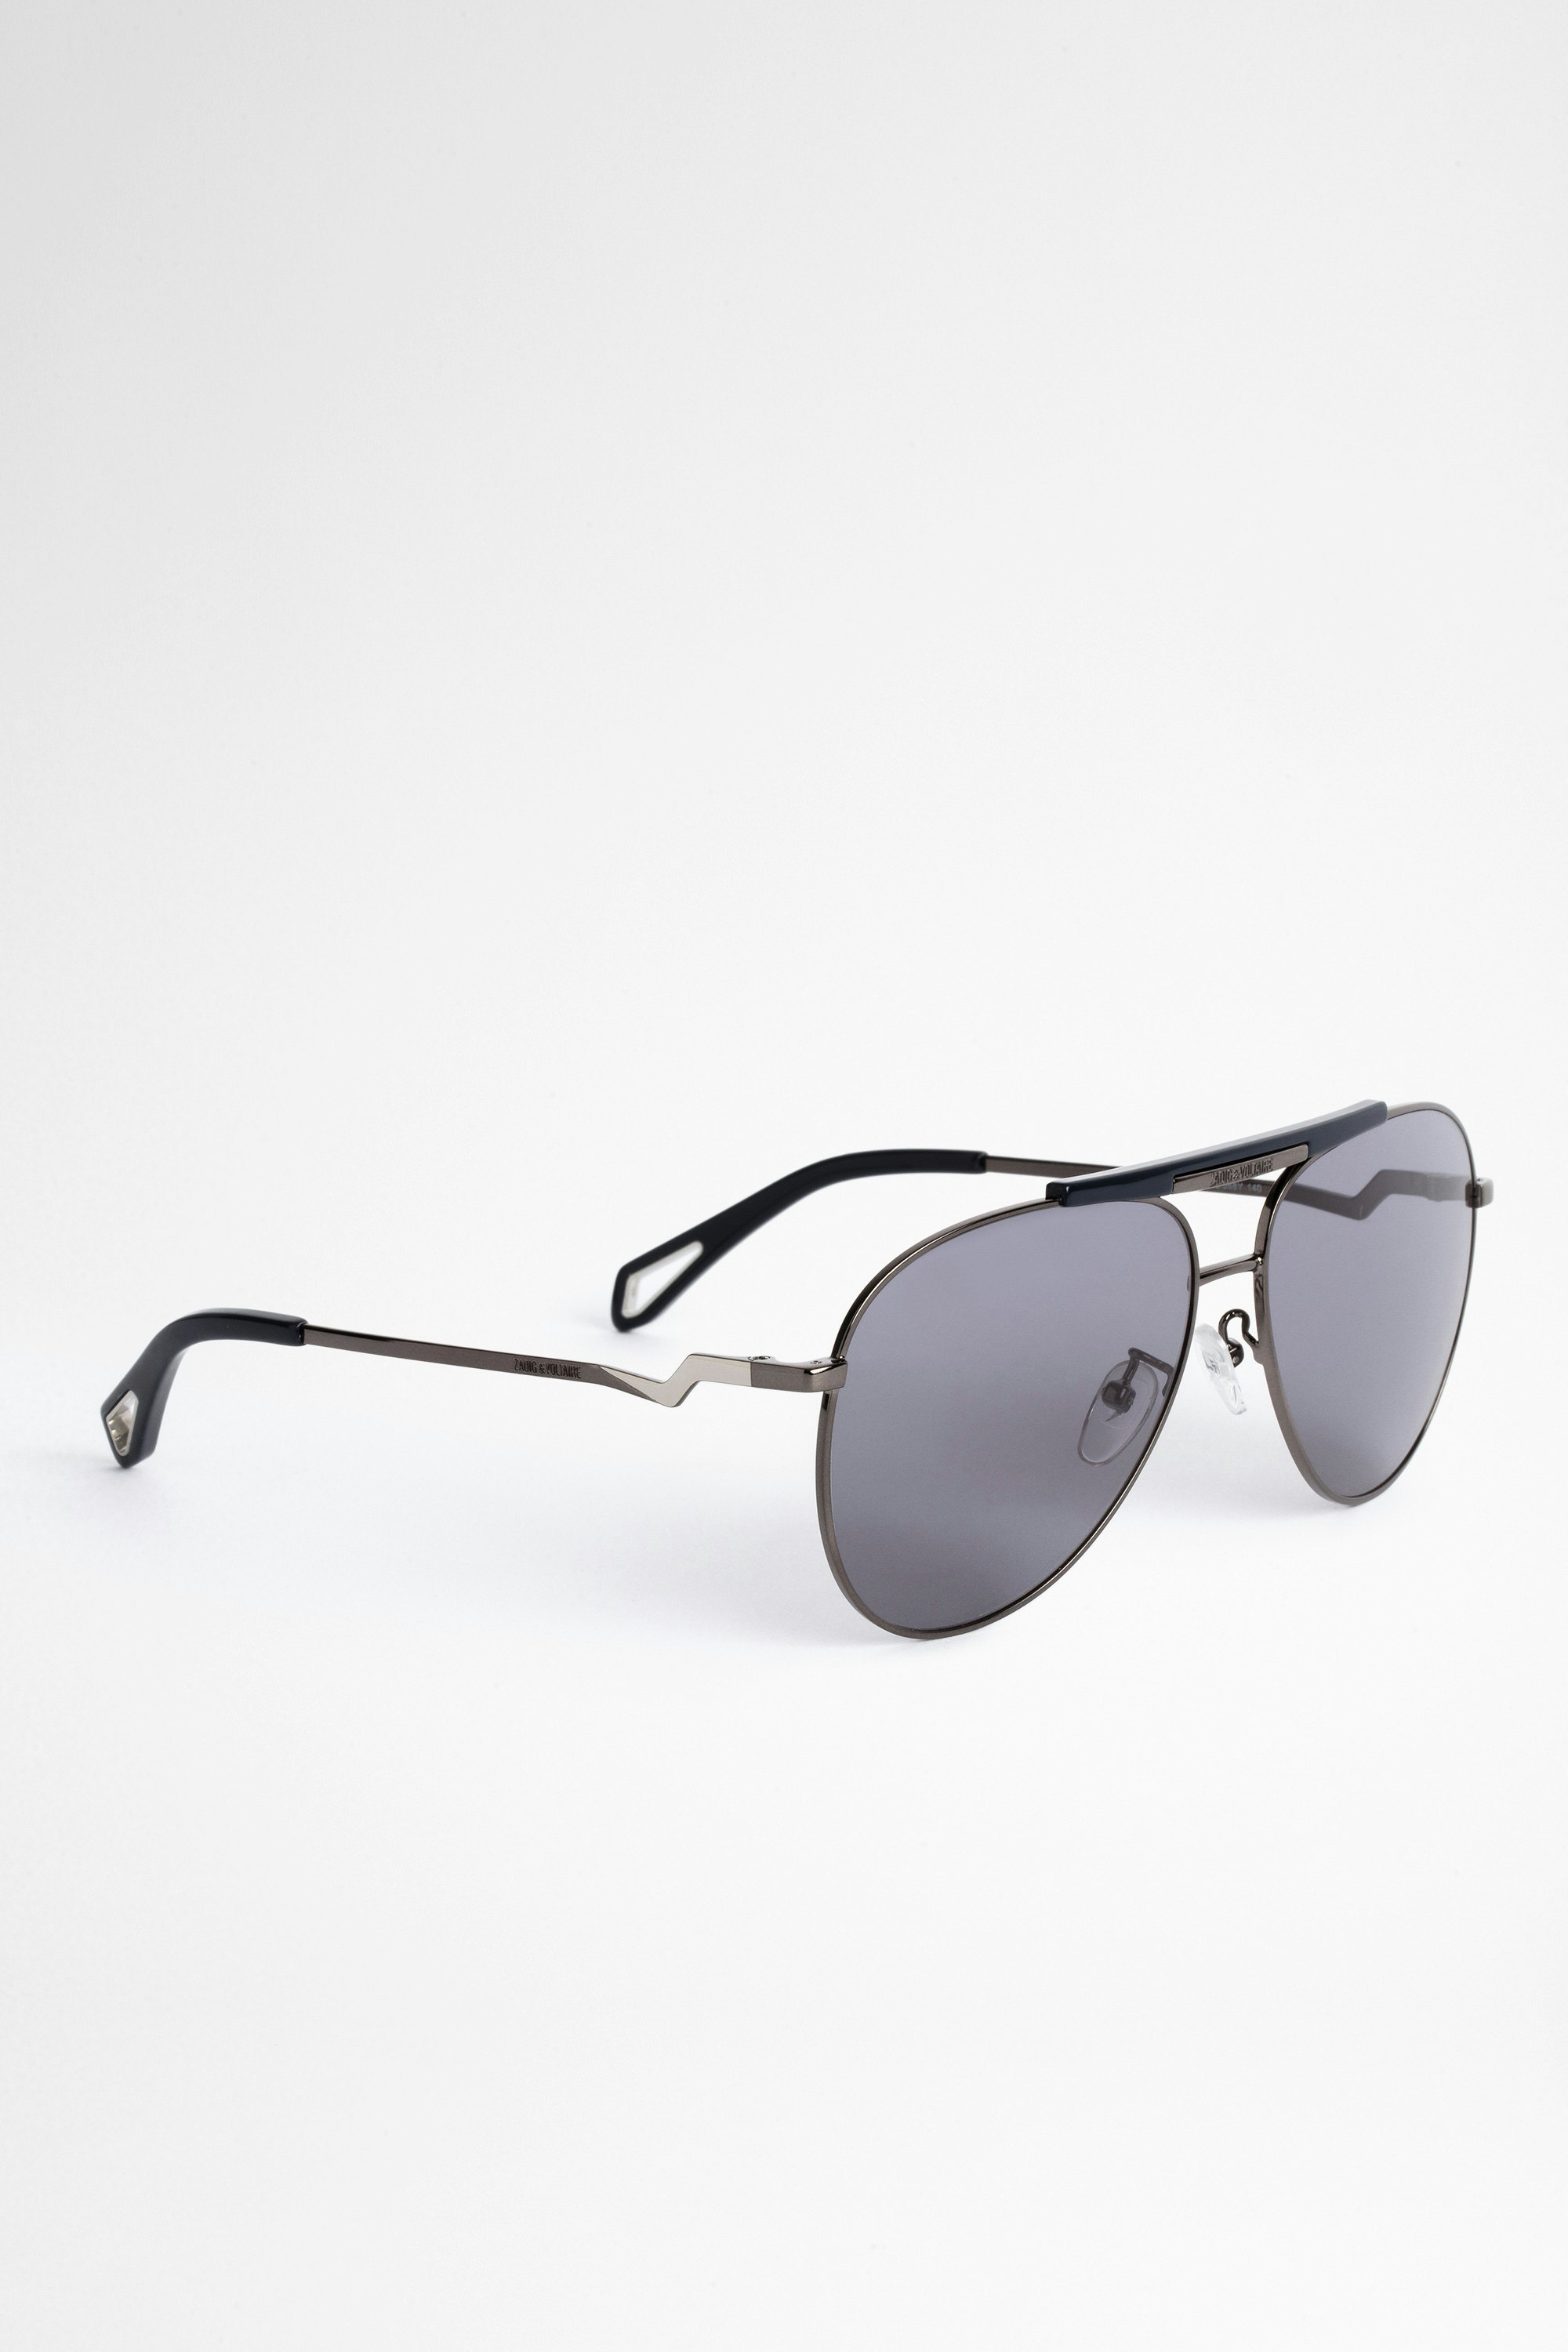 Sunglasses SZV280 Grey unisex sunglasses